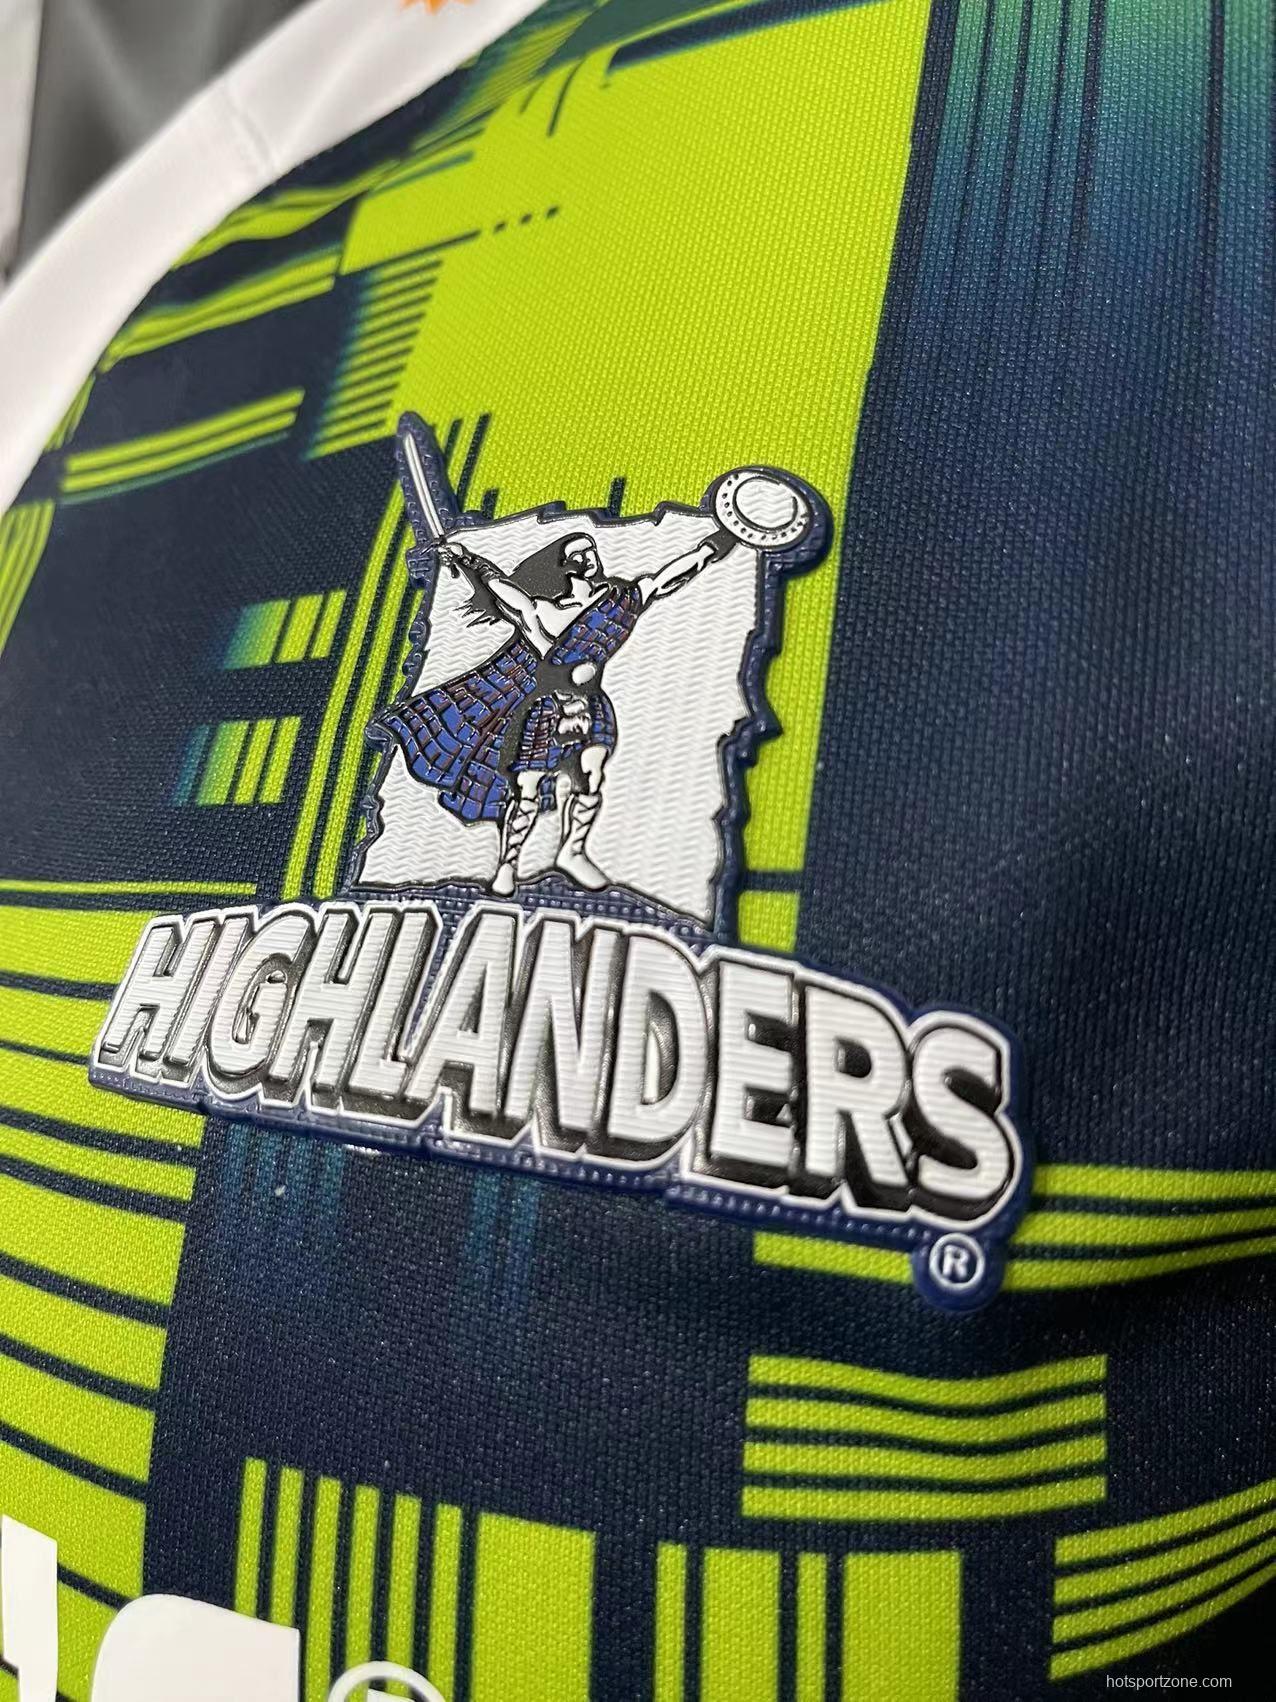 Highlanders 2022 Men's Super Rugby Training Jersey